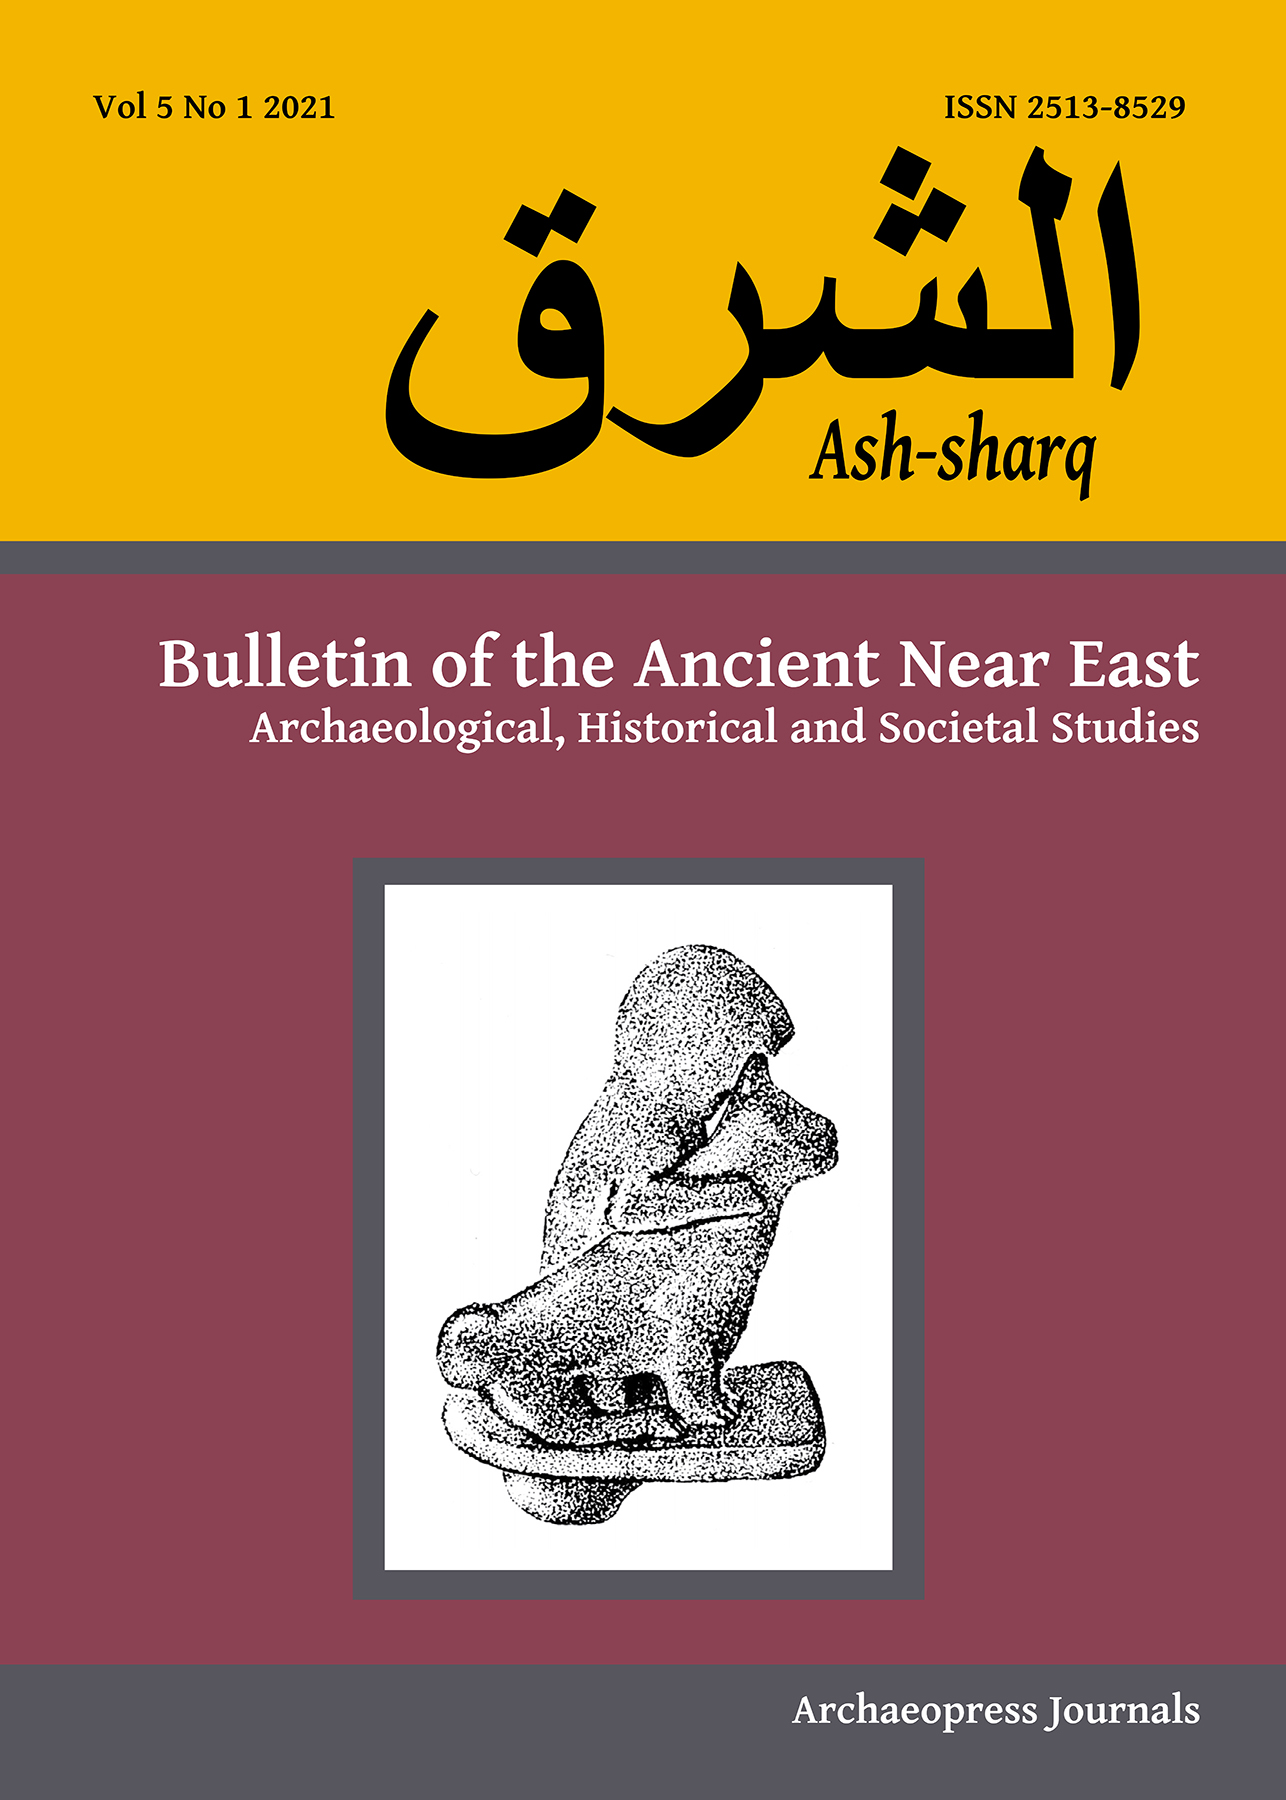 Ash-sharq: Bulletin of the Ancient Near East – Archaeological, Historical and Societal Studies